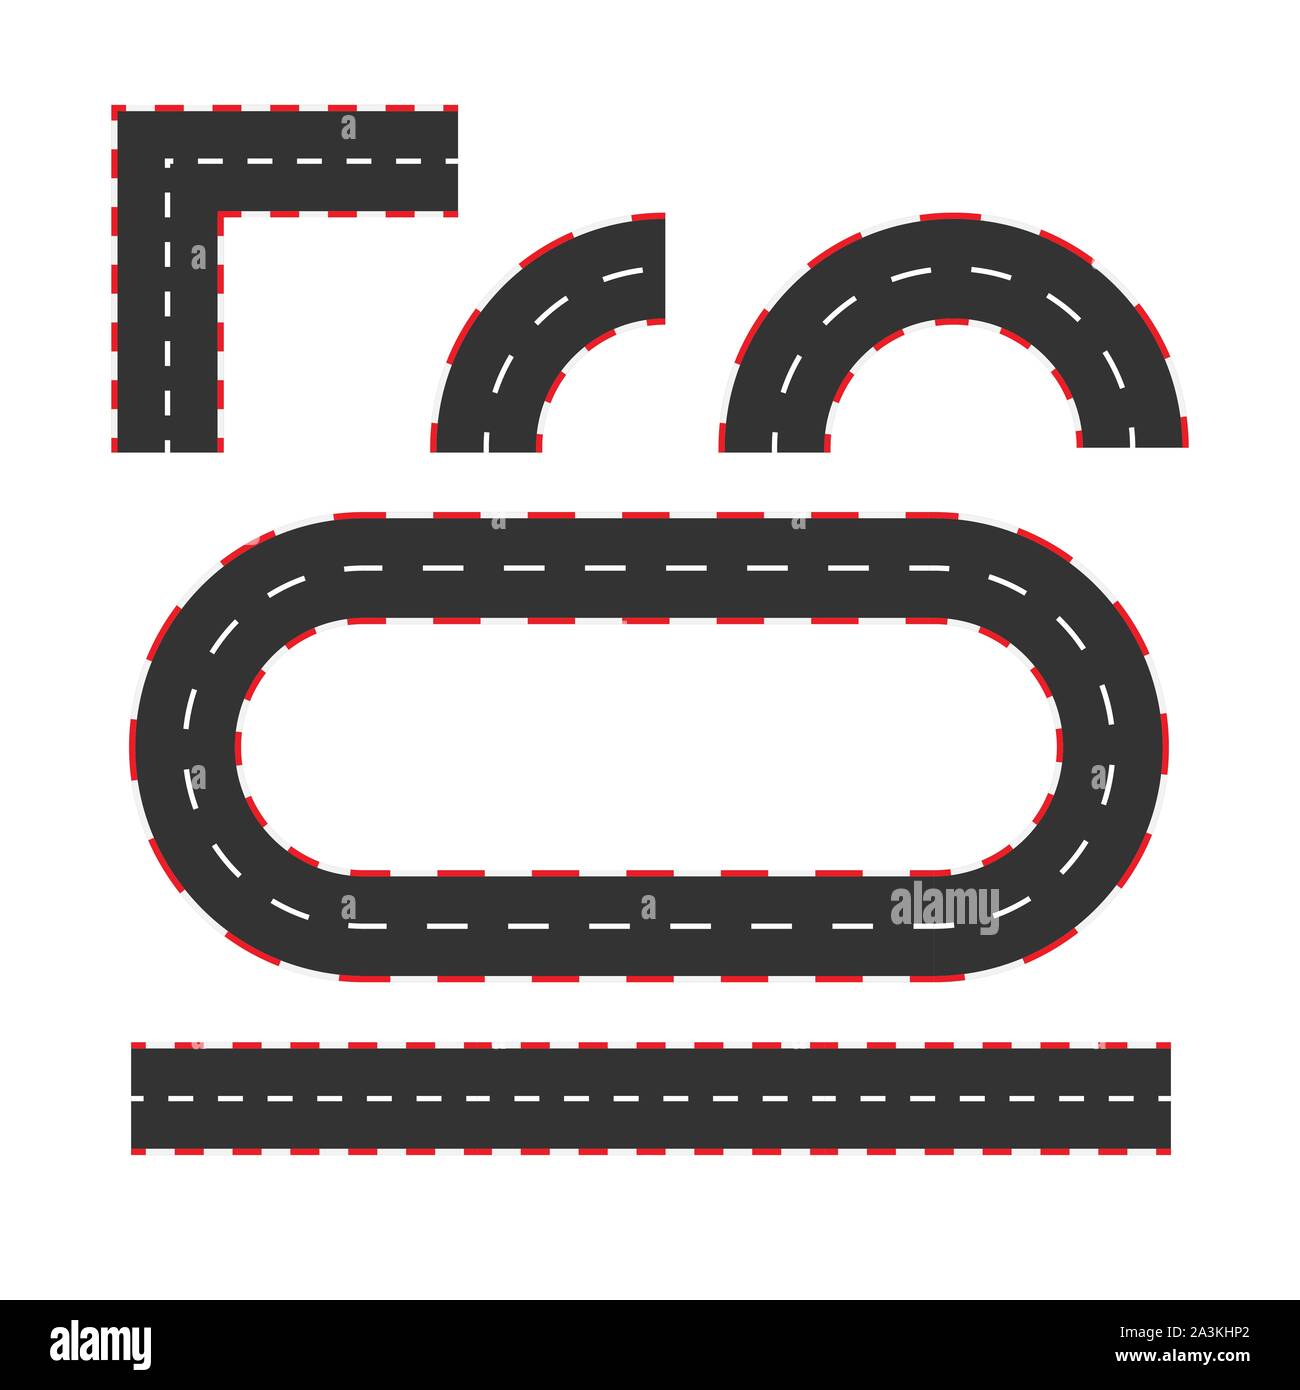 oval race track clip art